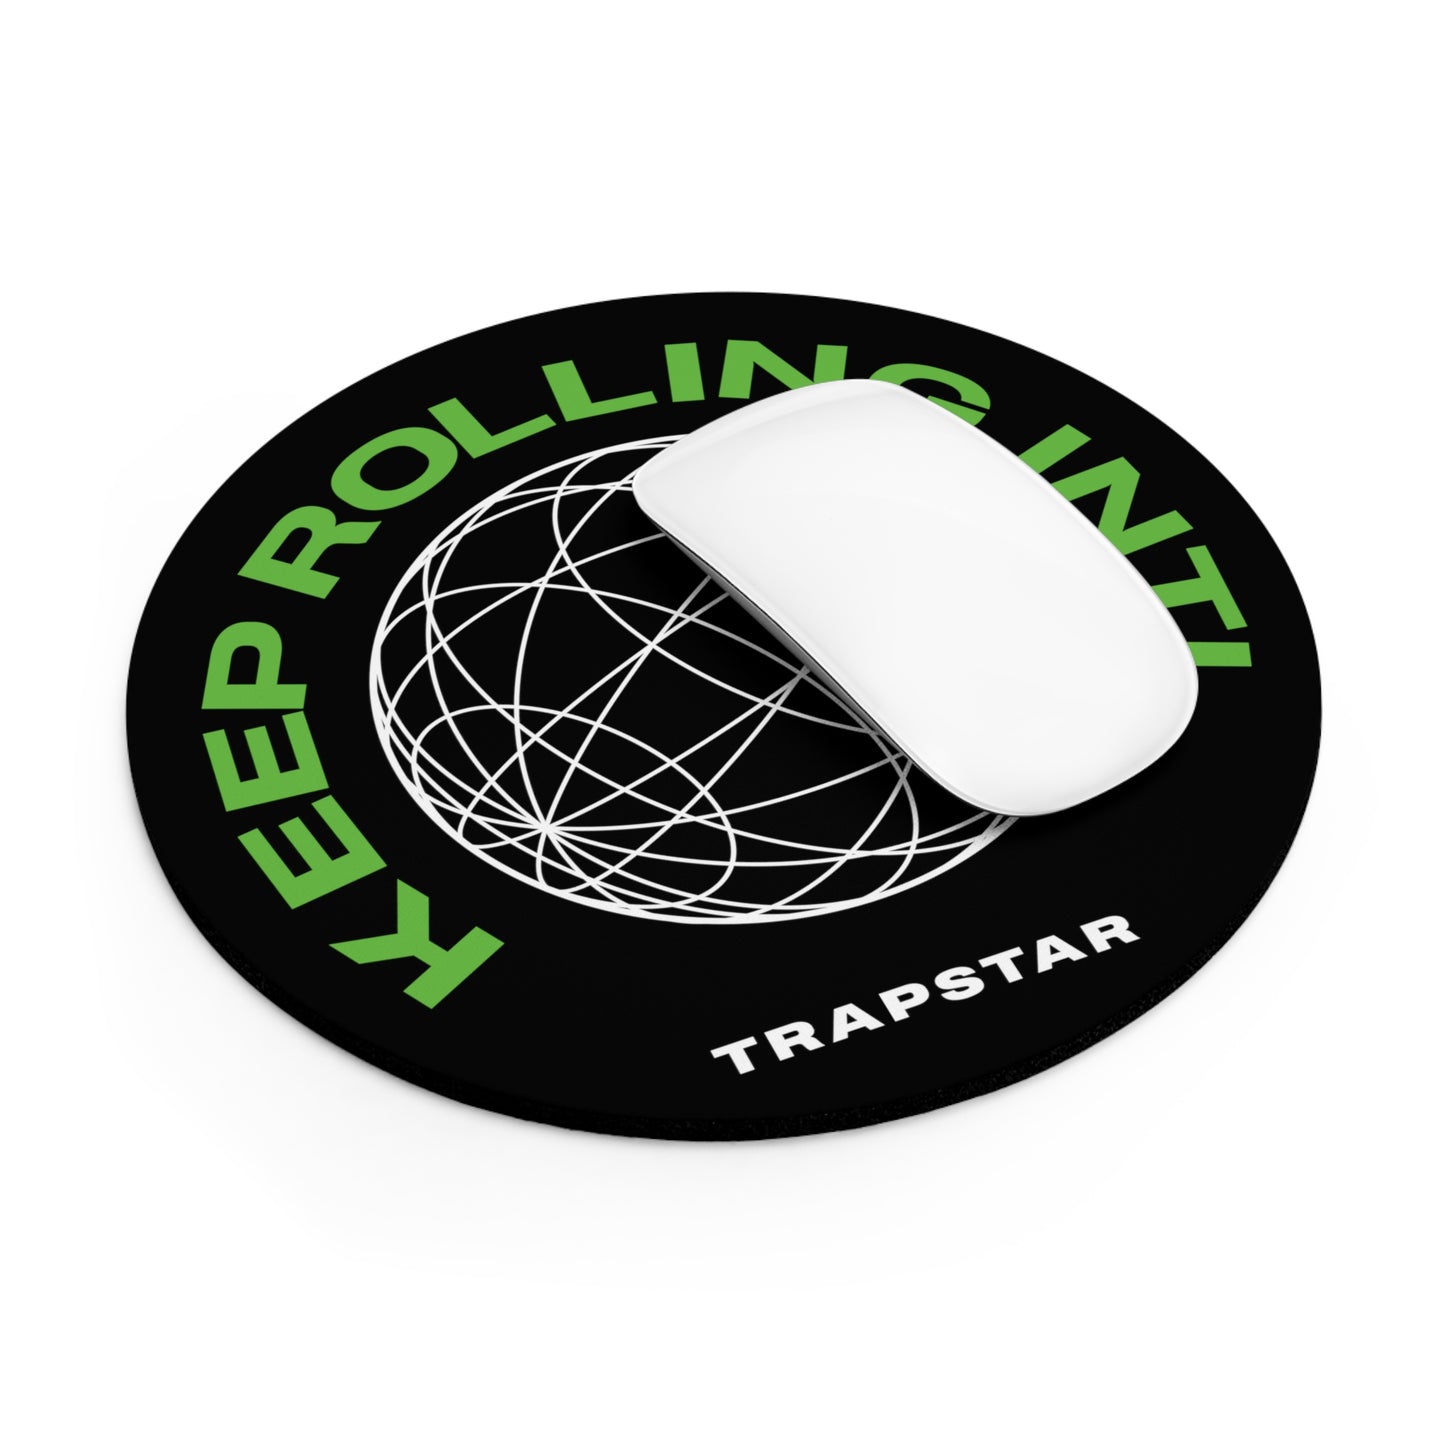 KRI “Global Trapstar” Mouse Pad